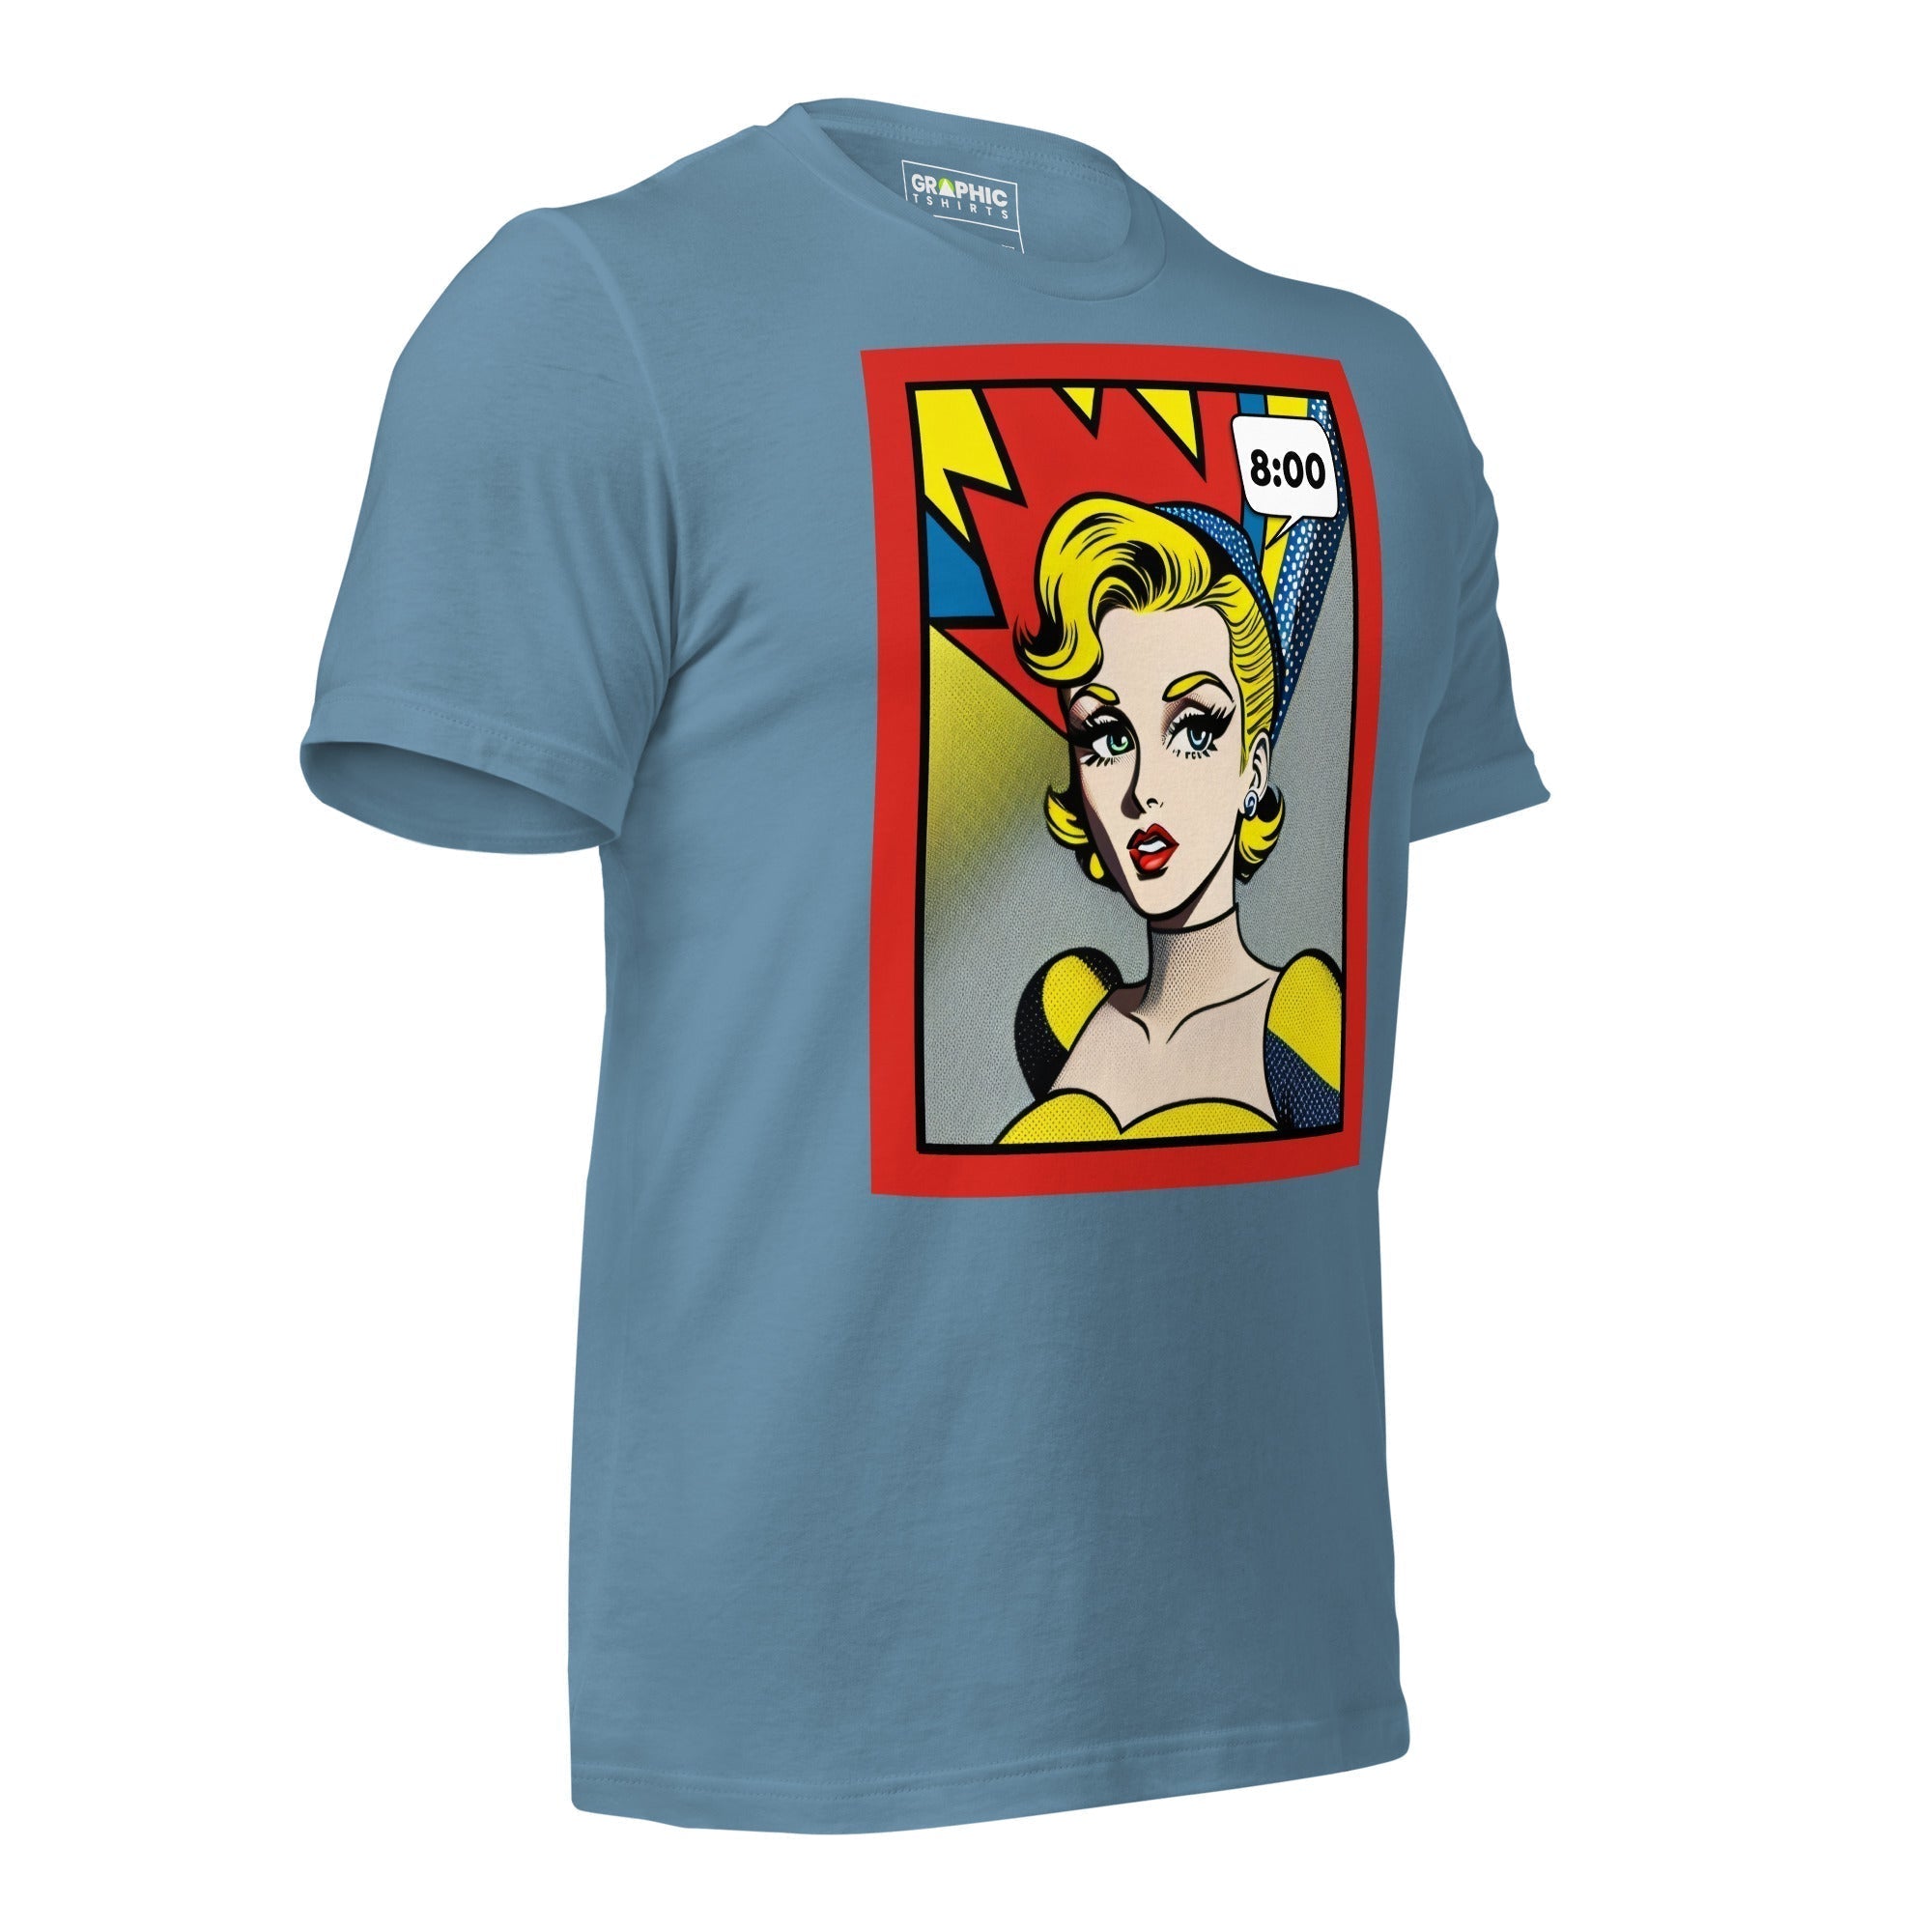 Unisex Crew Neck T-Shirt - Vintage American Comic Series v.15 - GRAPHIC T-SHIRTS